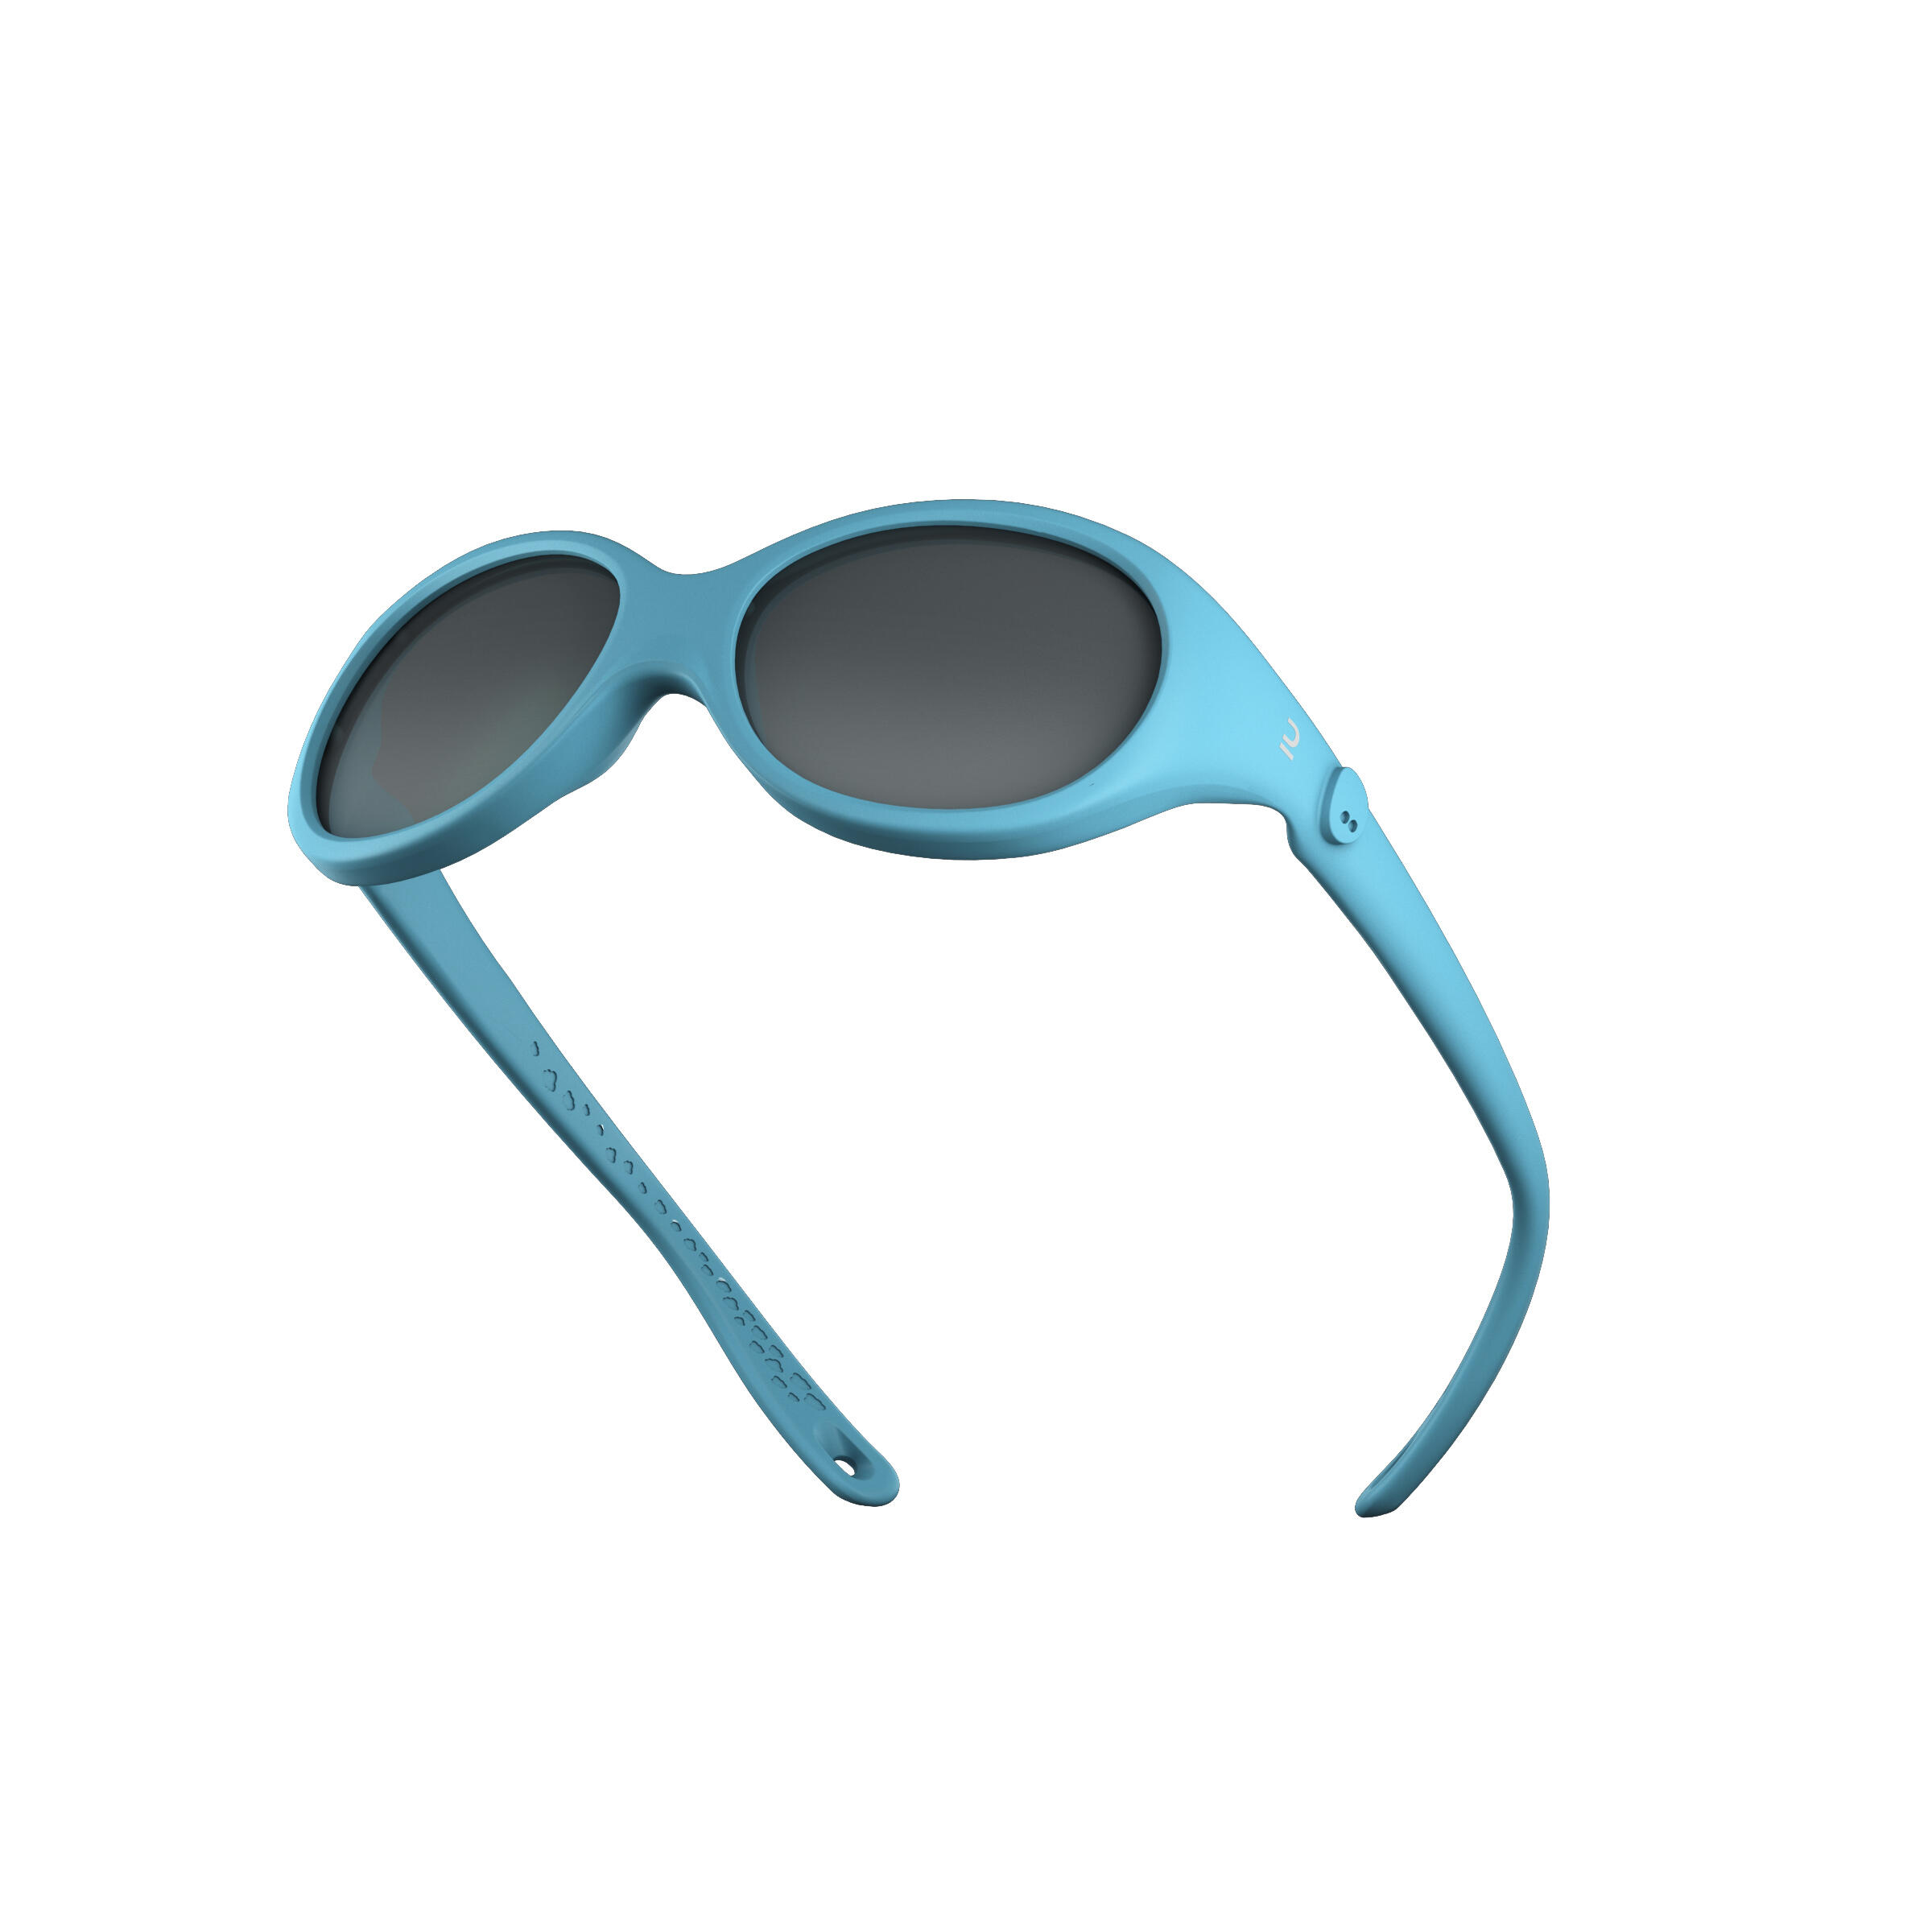 Kids' Sunglasses - MHB 100 Blue - Glacier blue - Quechua - Decathlon